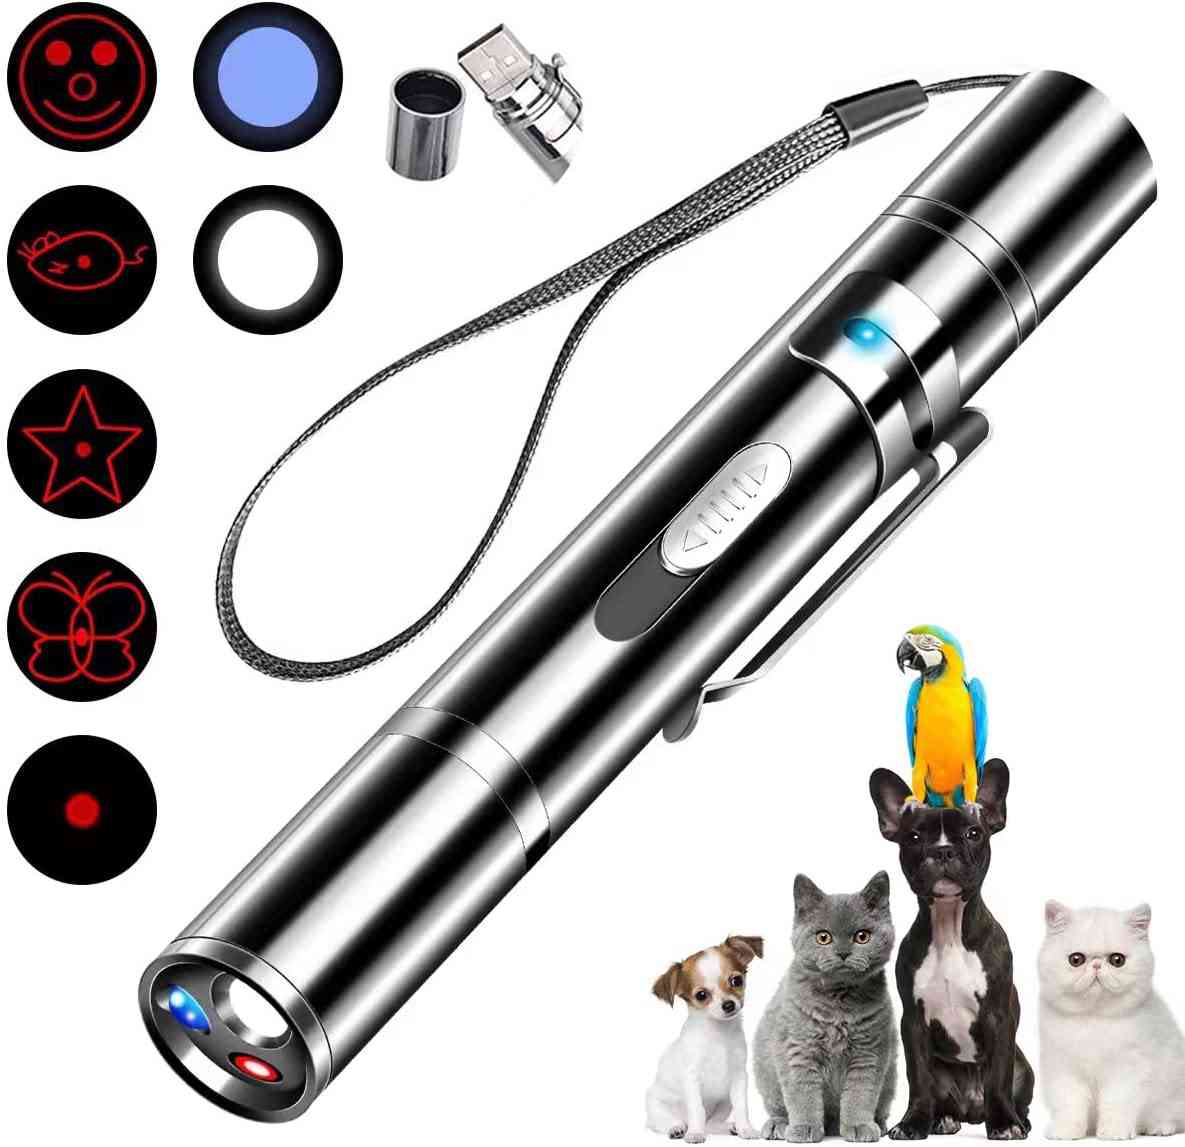 Danigh-buy Cat Pointer Toy,Dog Laser Pointer,7 Adjustable Patterns Laser ,Long Range 3 Modes Training Chaser Interactive Toy,USB Recharge